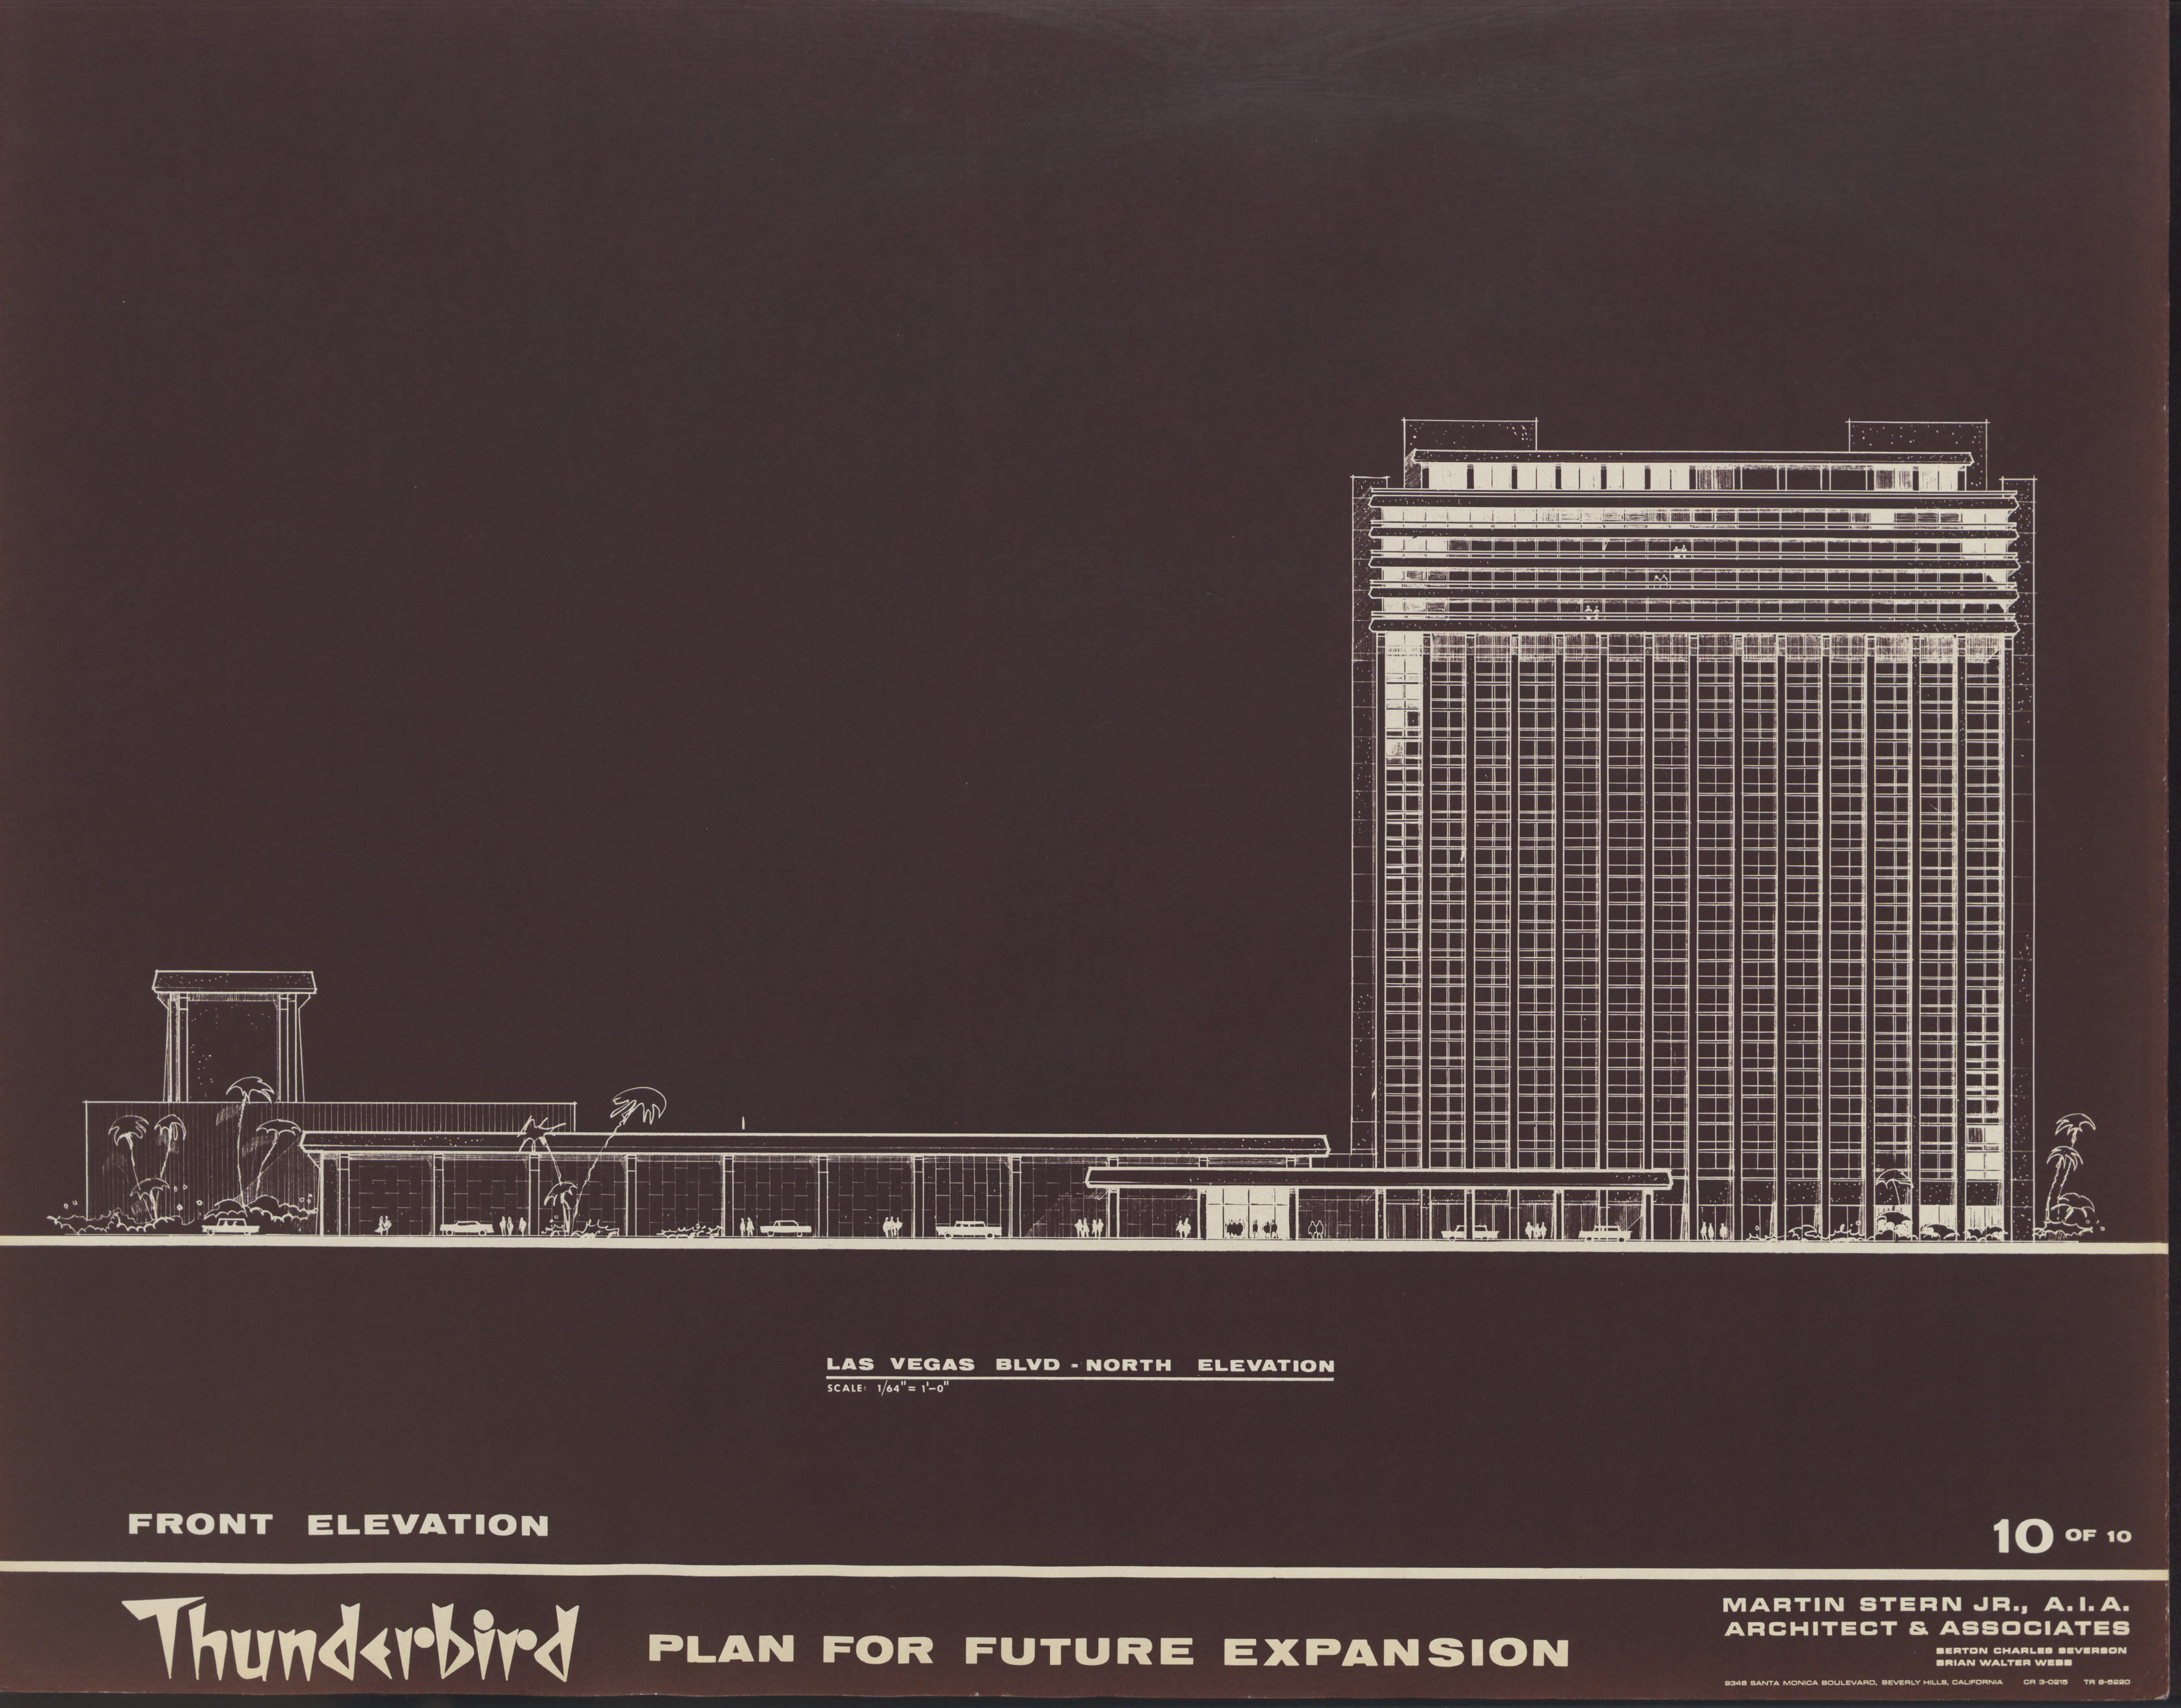 Thunderbird Plan for Future Expansion Proposal, image 10